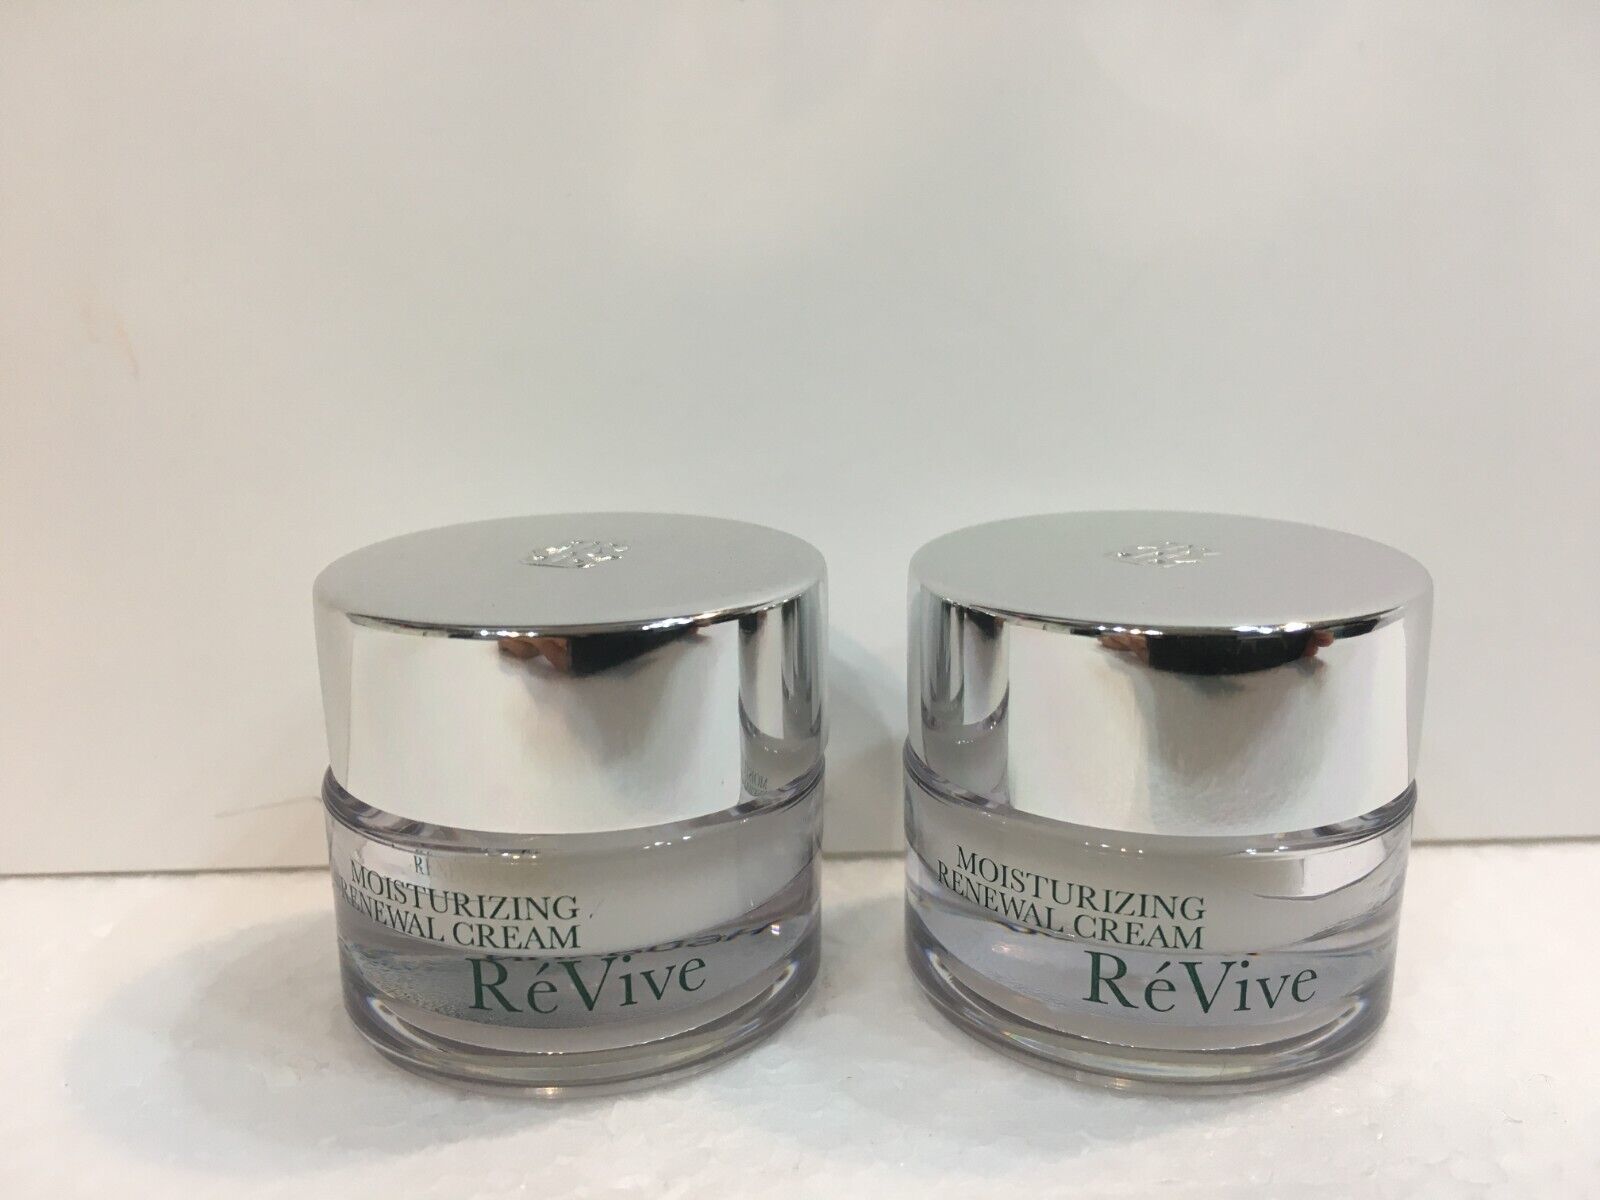 ReVive Moisturizing Renewal Cream Travel Size 5 ml X 2 pcs = 10 ml - $18.80